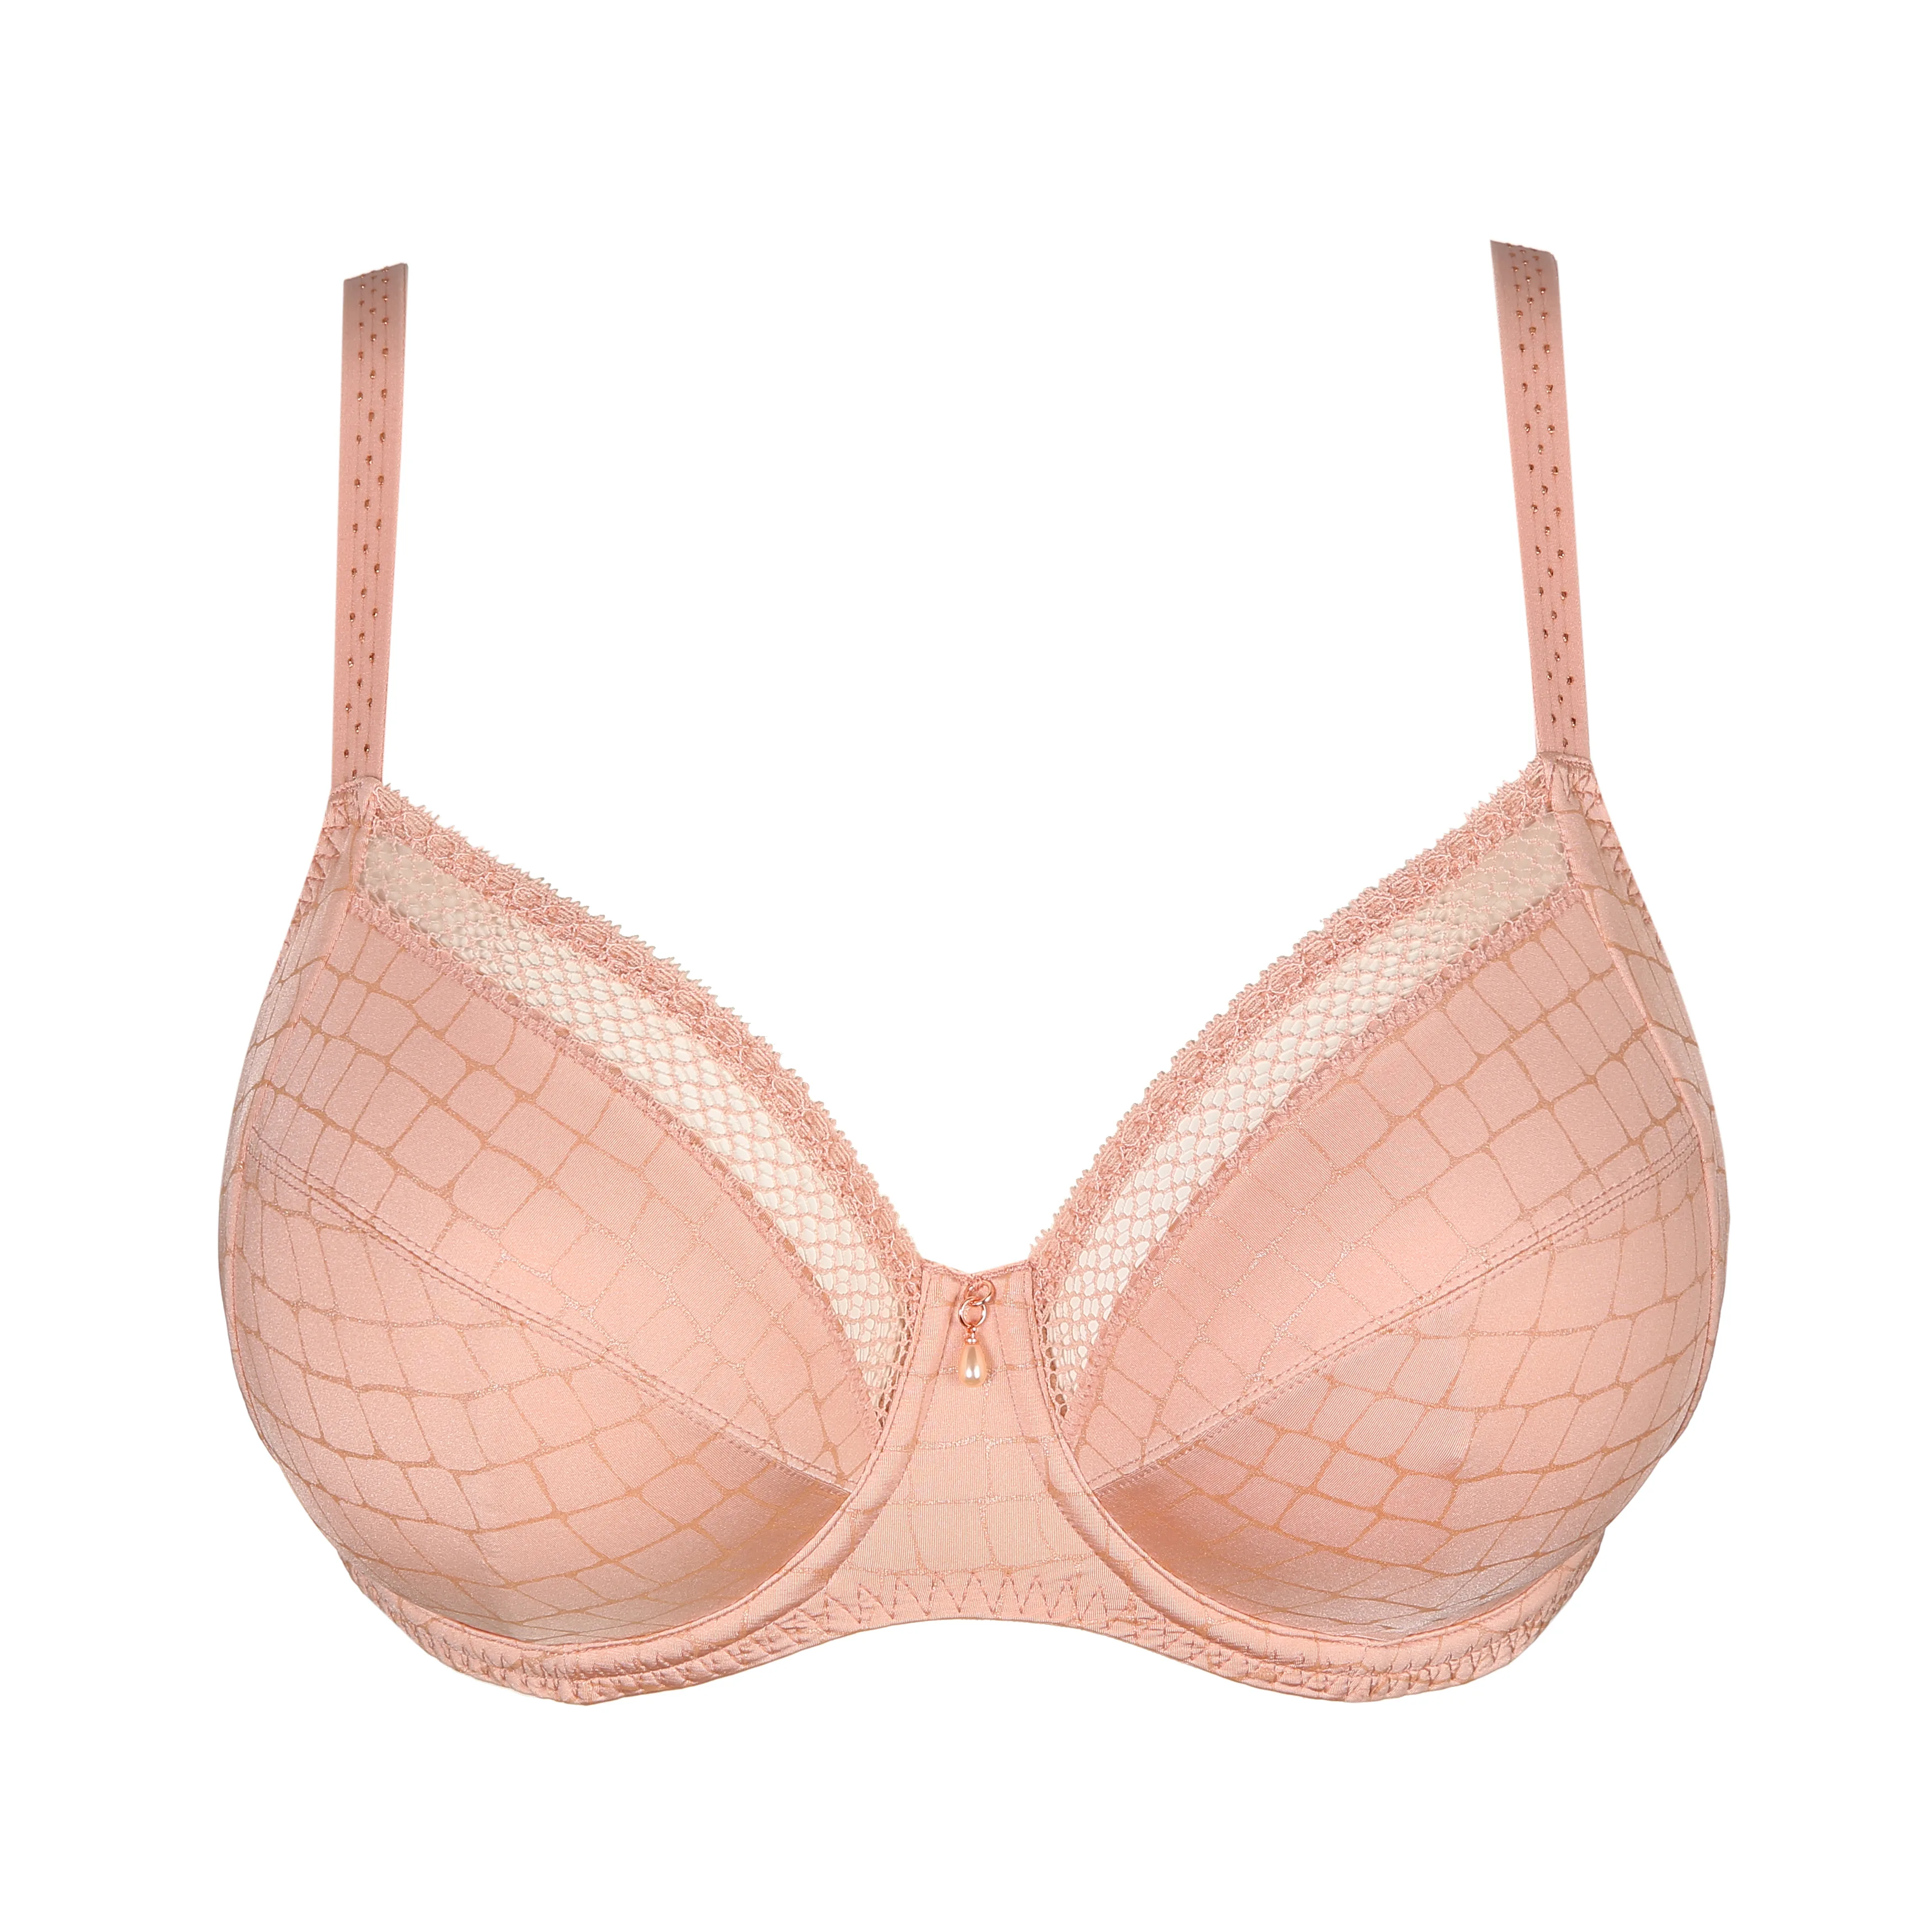 Brief Avellino Prima Donna Twist couleur Pearly pink tailles 36 38 40 42 44  46 48 Prima Donna Twist